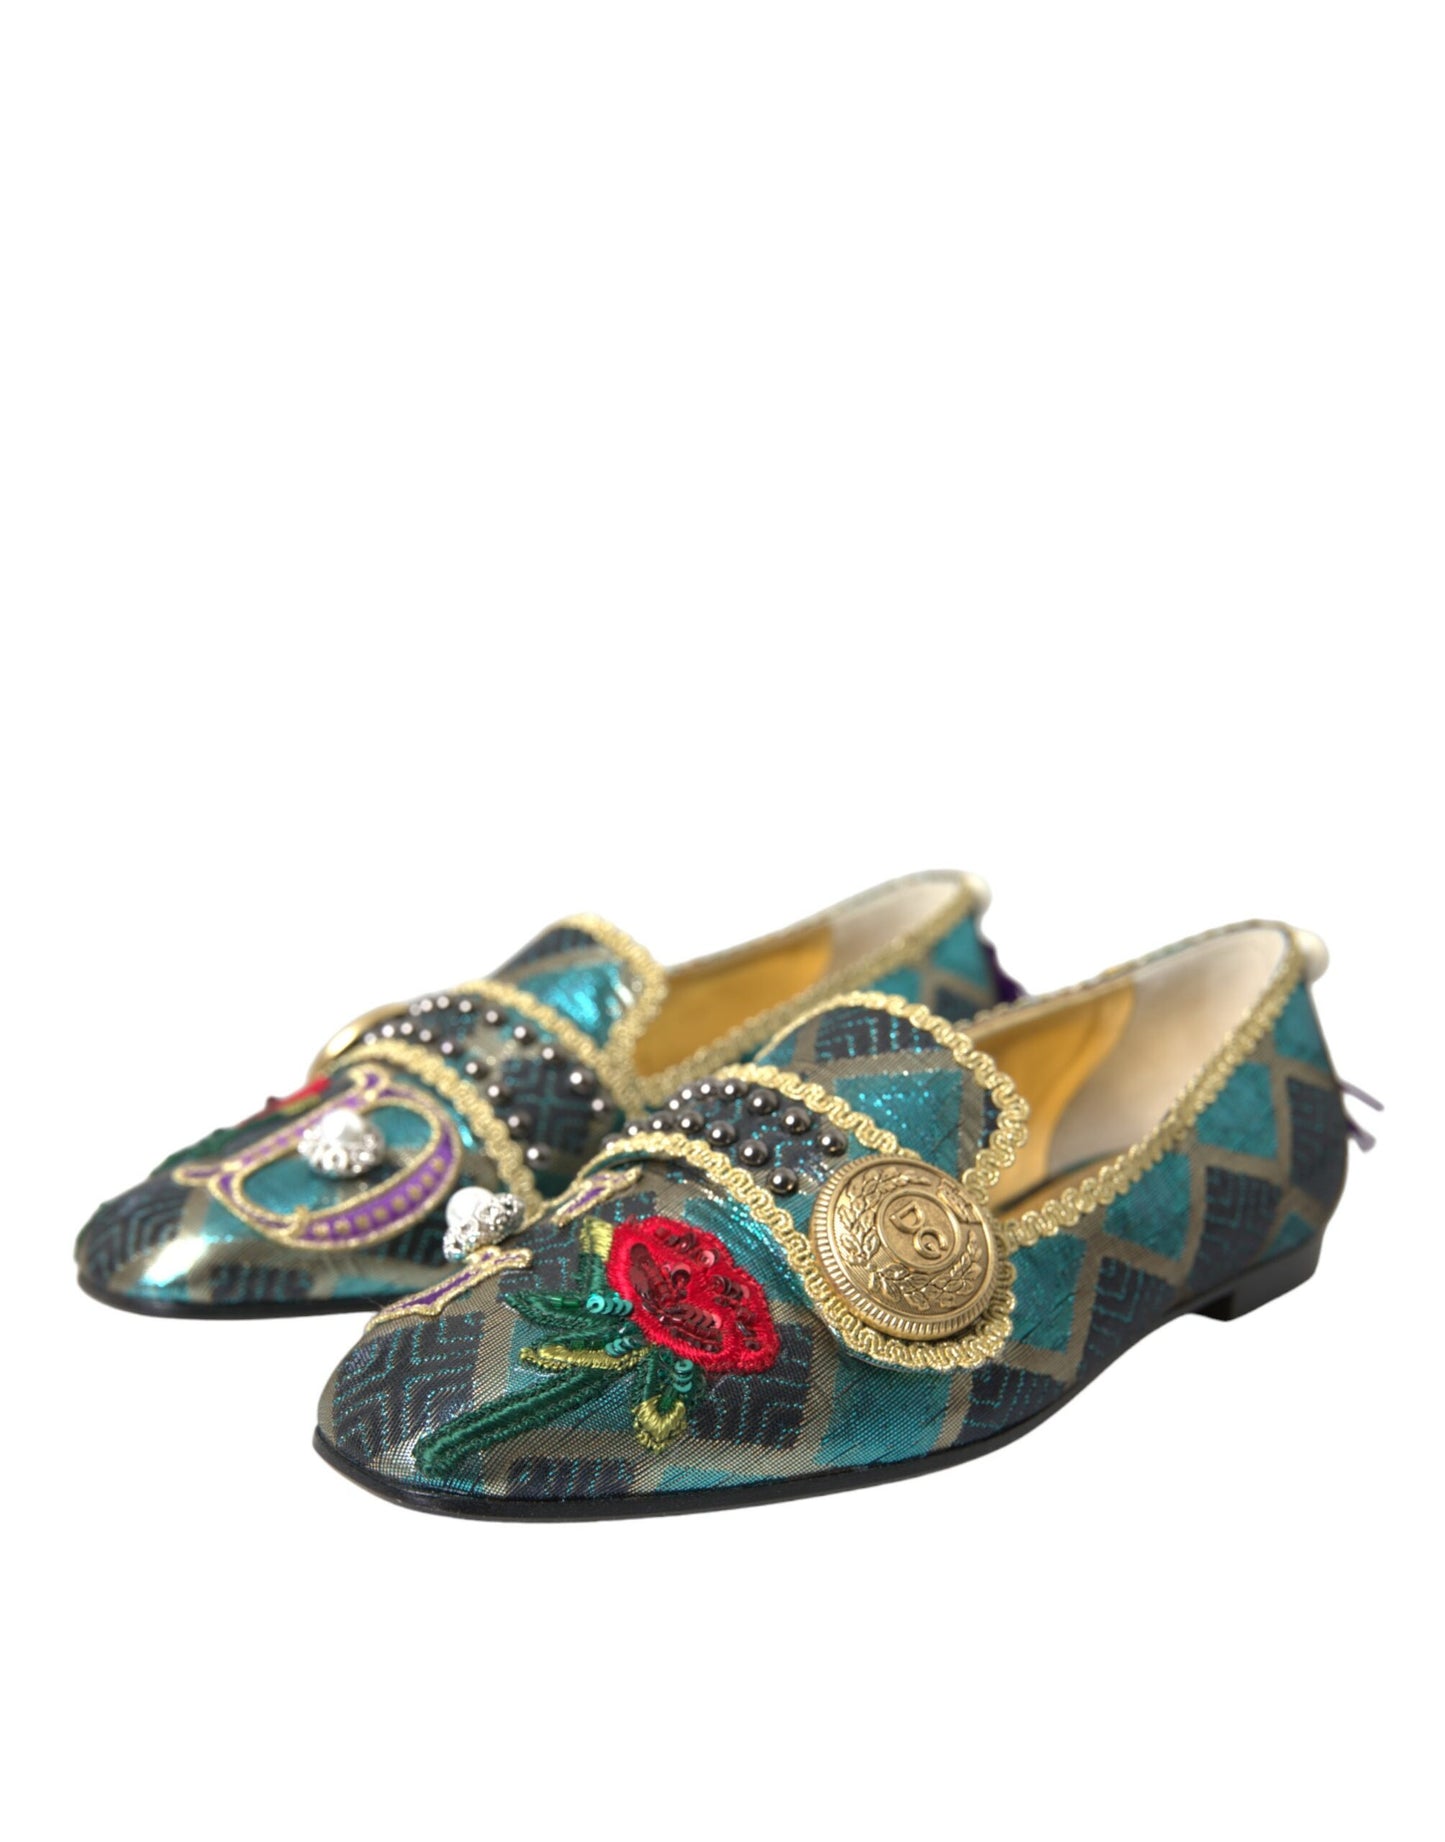 Dolce & Gabbana Multicolor Jacquard Embellished Loafers Shoes